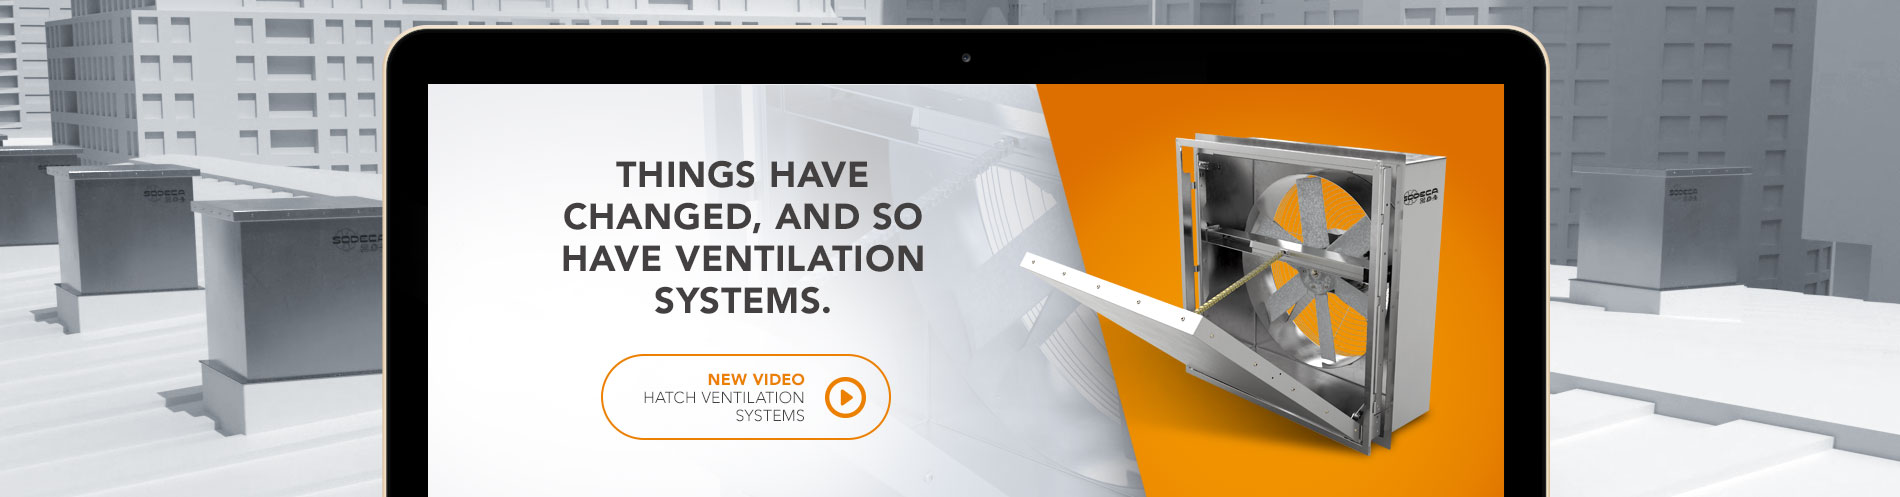 New video hatch ventilation systems